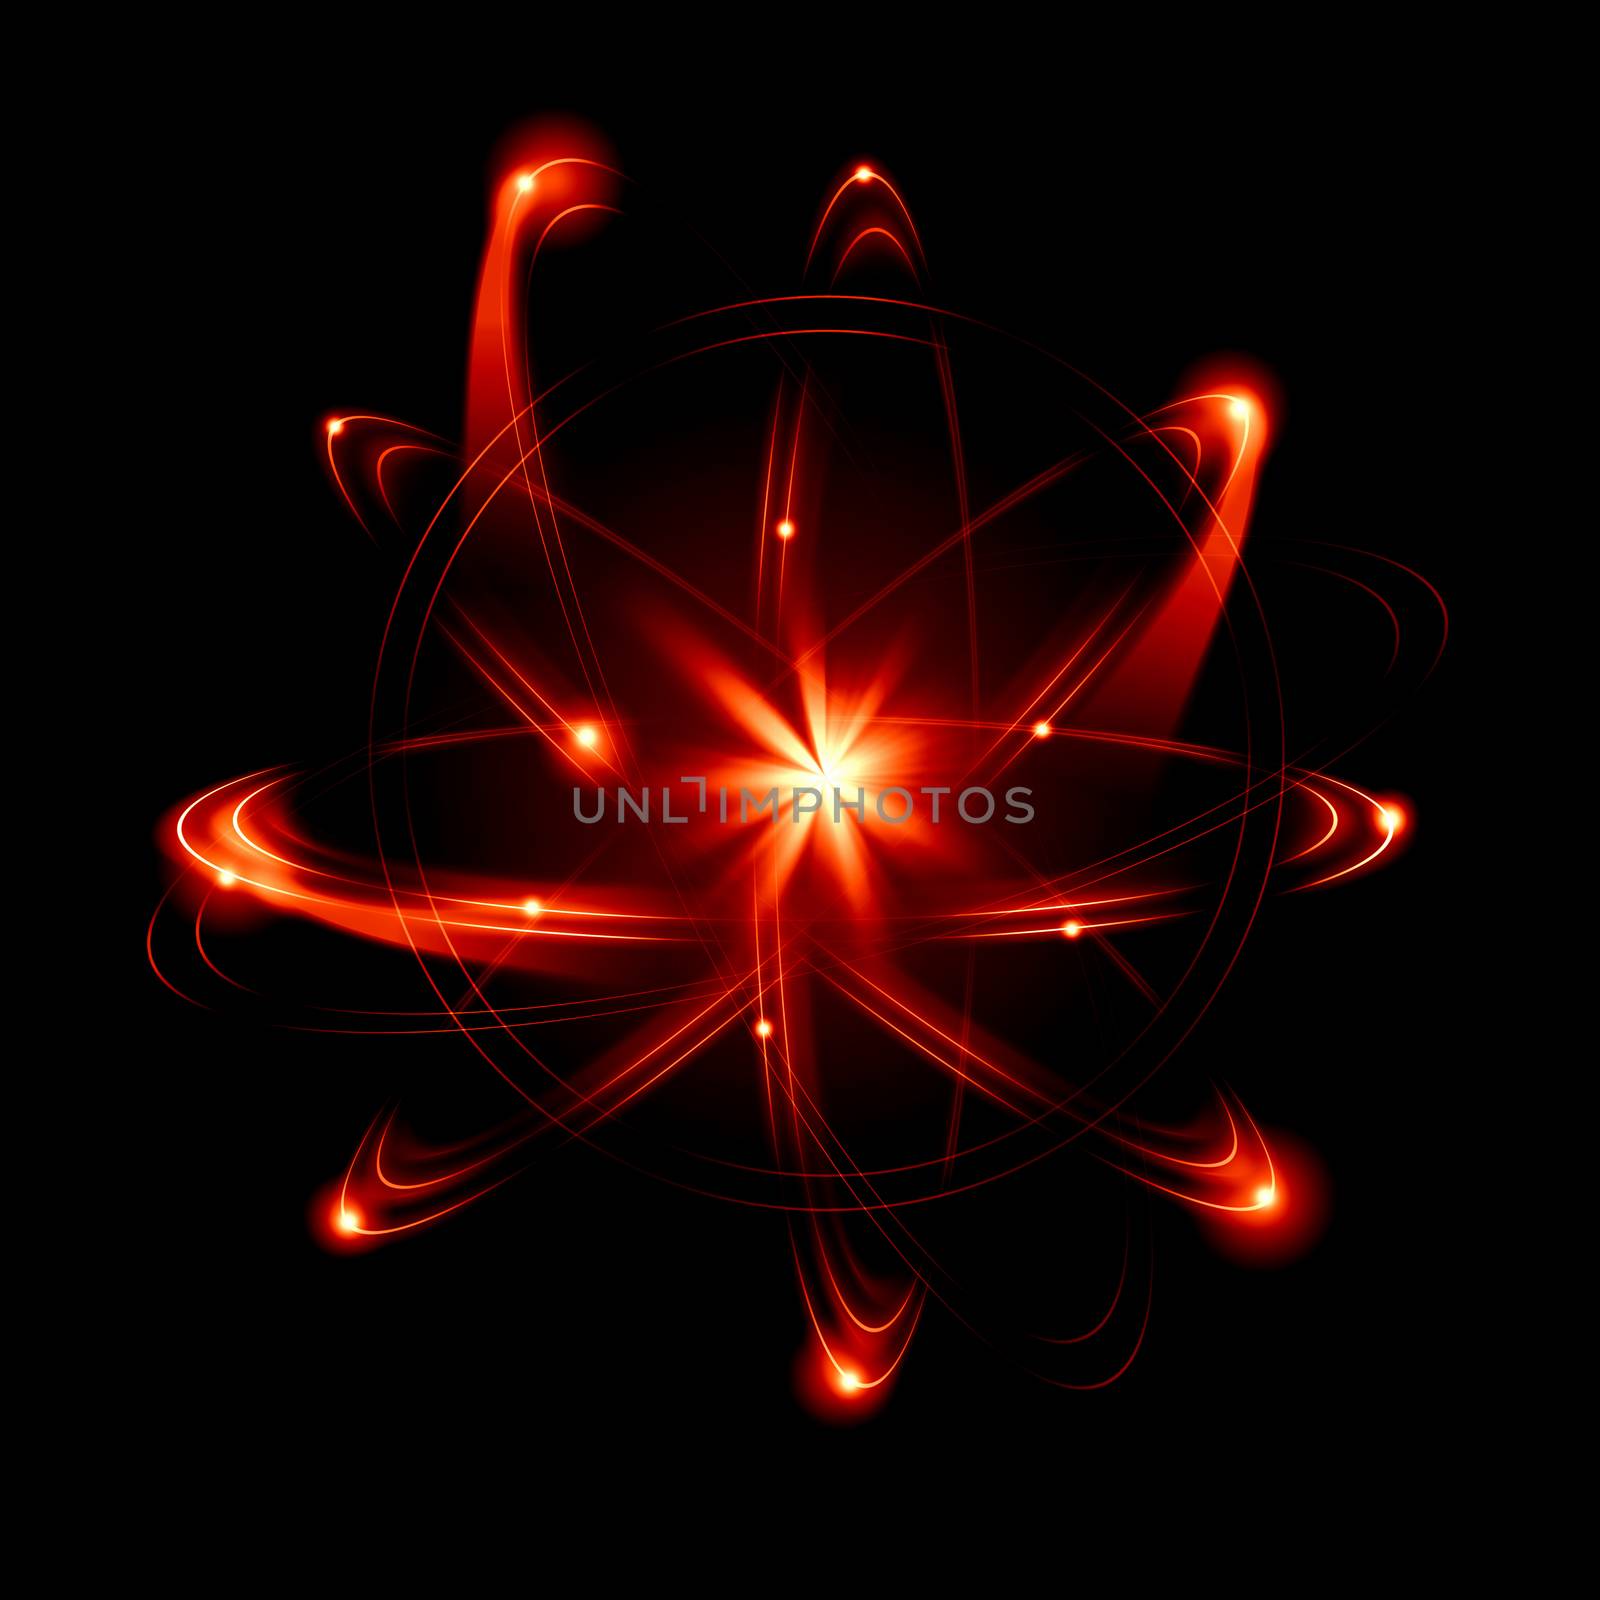 Atom image by sergey_nivens